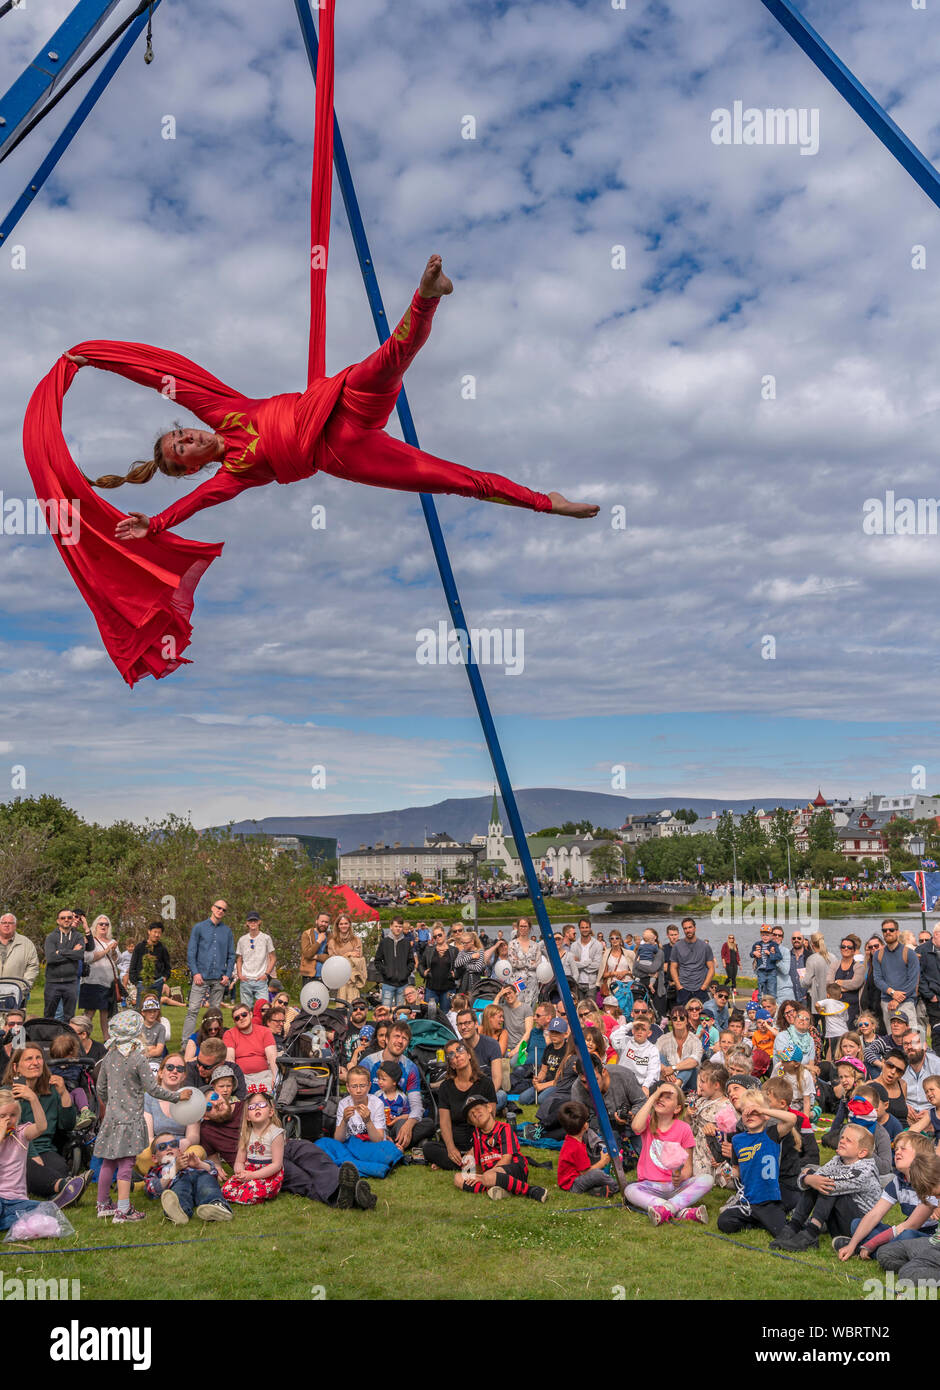 Aerial silk dance, Iceland's Independence Day, Reykjavik, Iceland Stock Photo